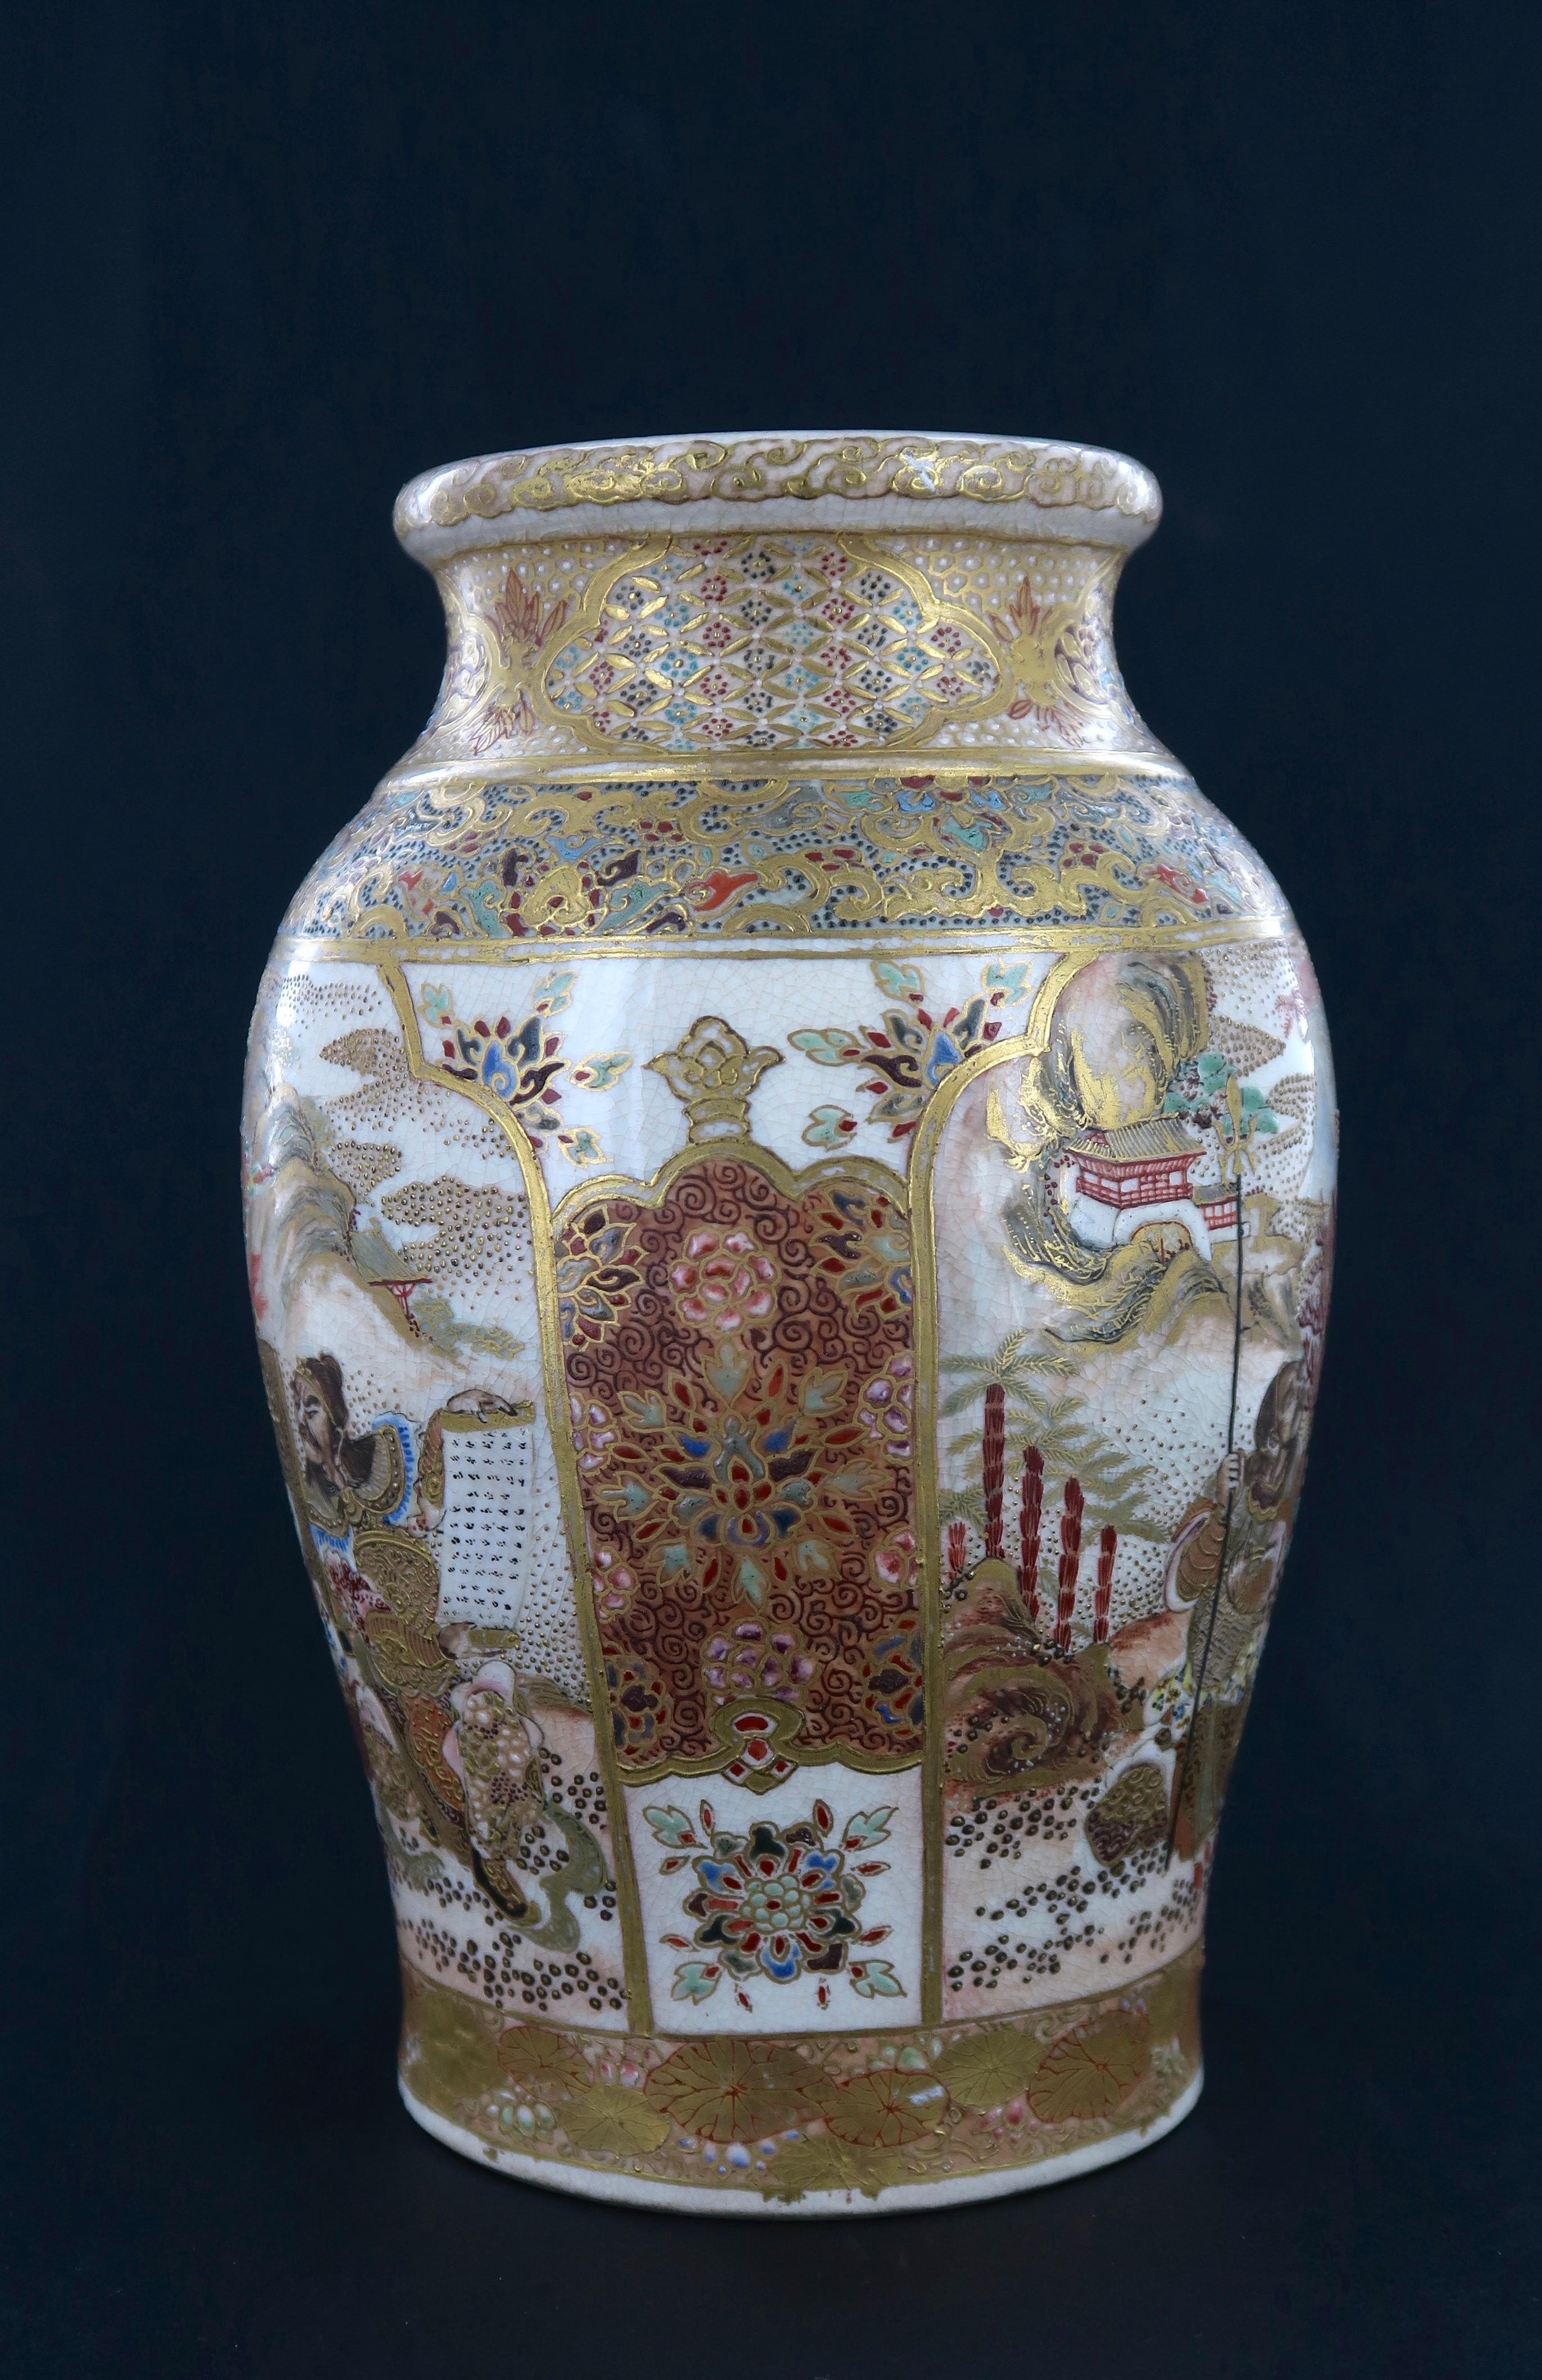 A Fine Meiji Period Satsuma Vase, Japan, 19th Century

Attributed to DAI NIHON KINKOZAN ZO

H: 5-3/4